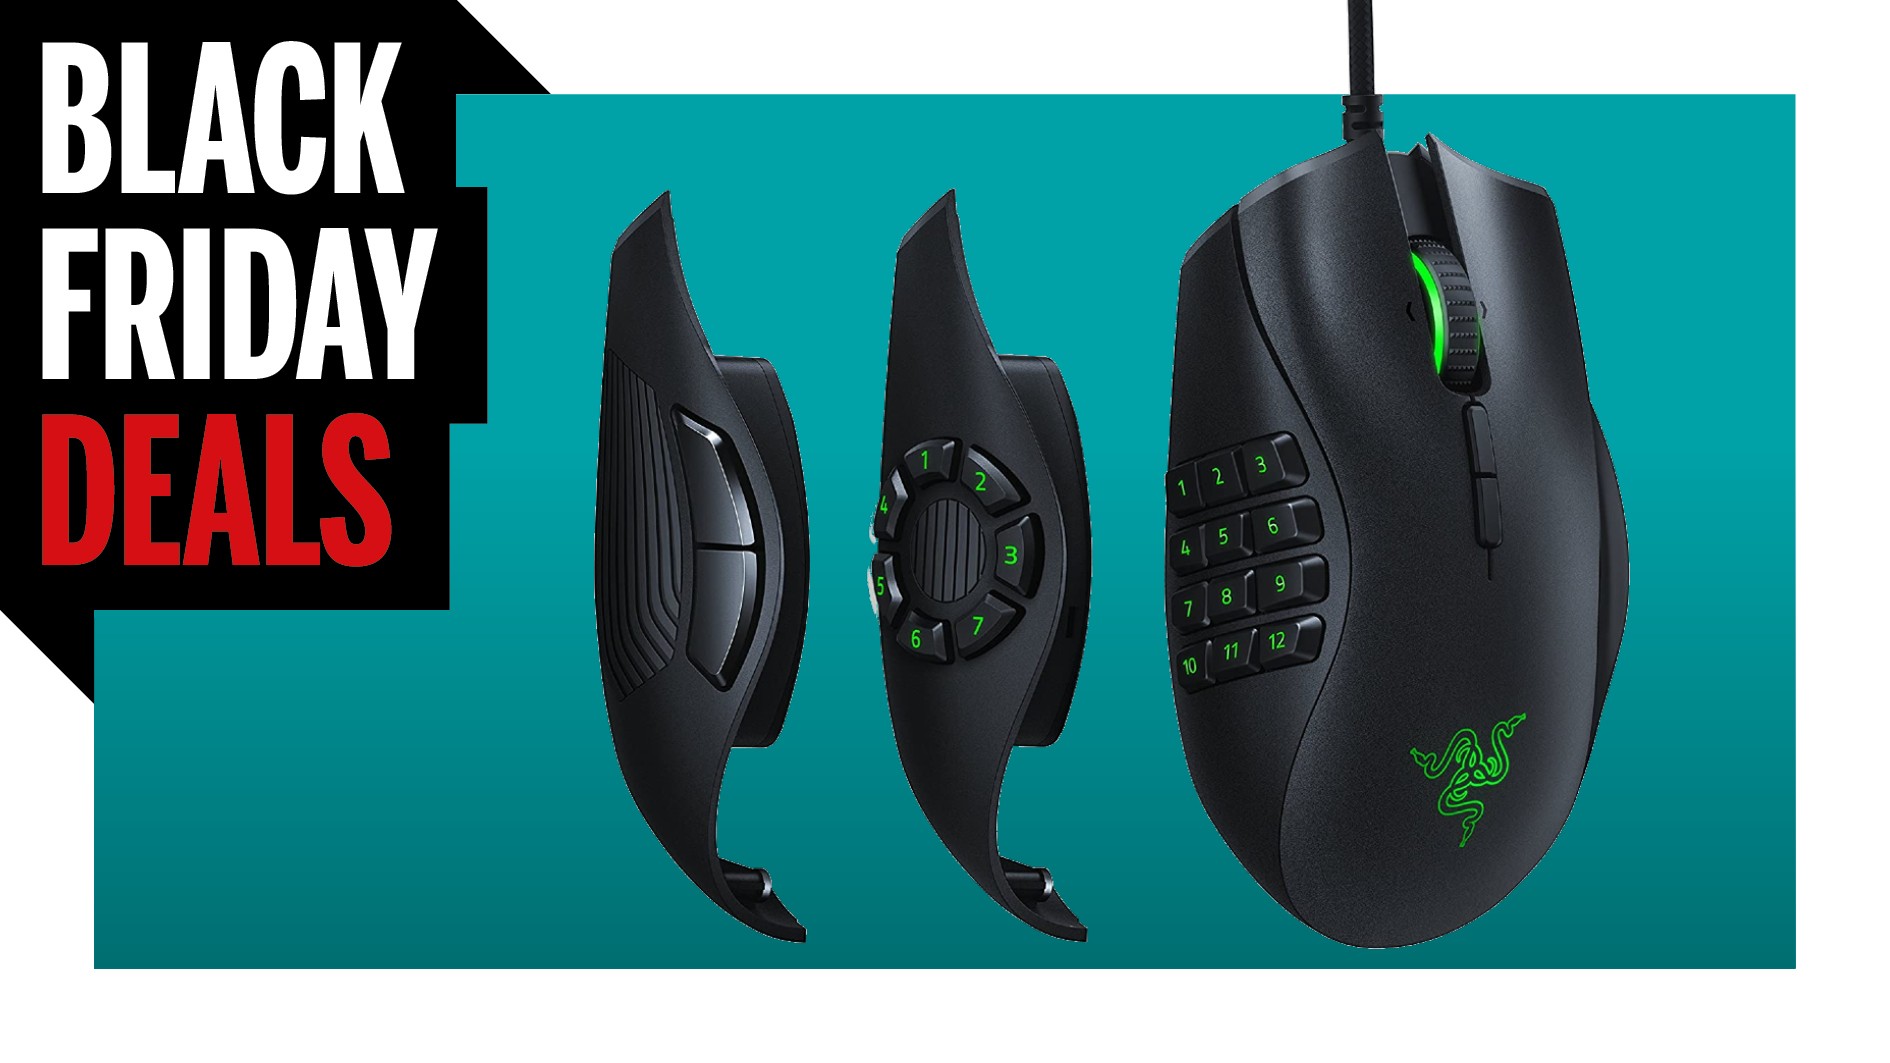 Razer Naga Black Friday deal—the best MMO mouse for $85 or less